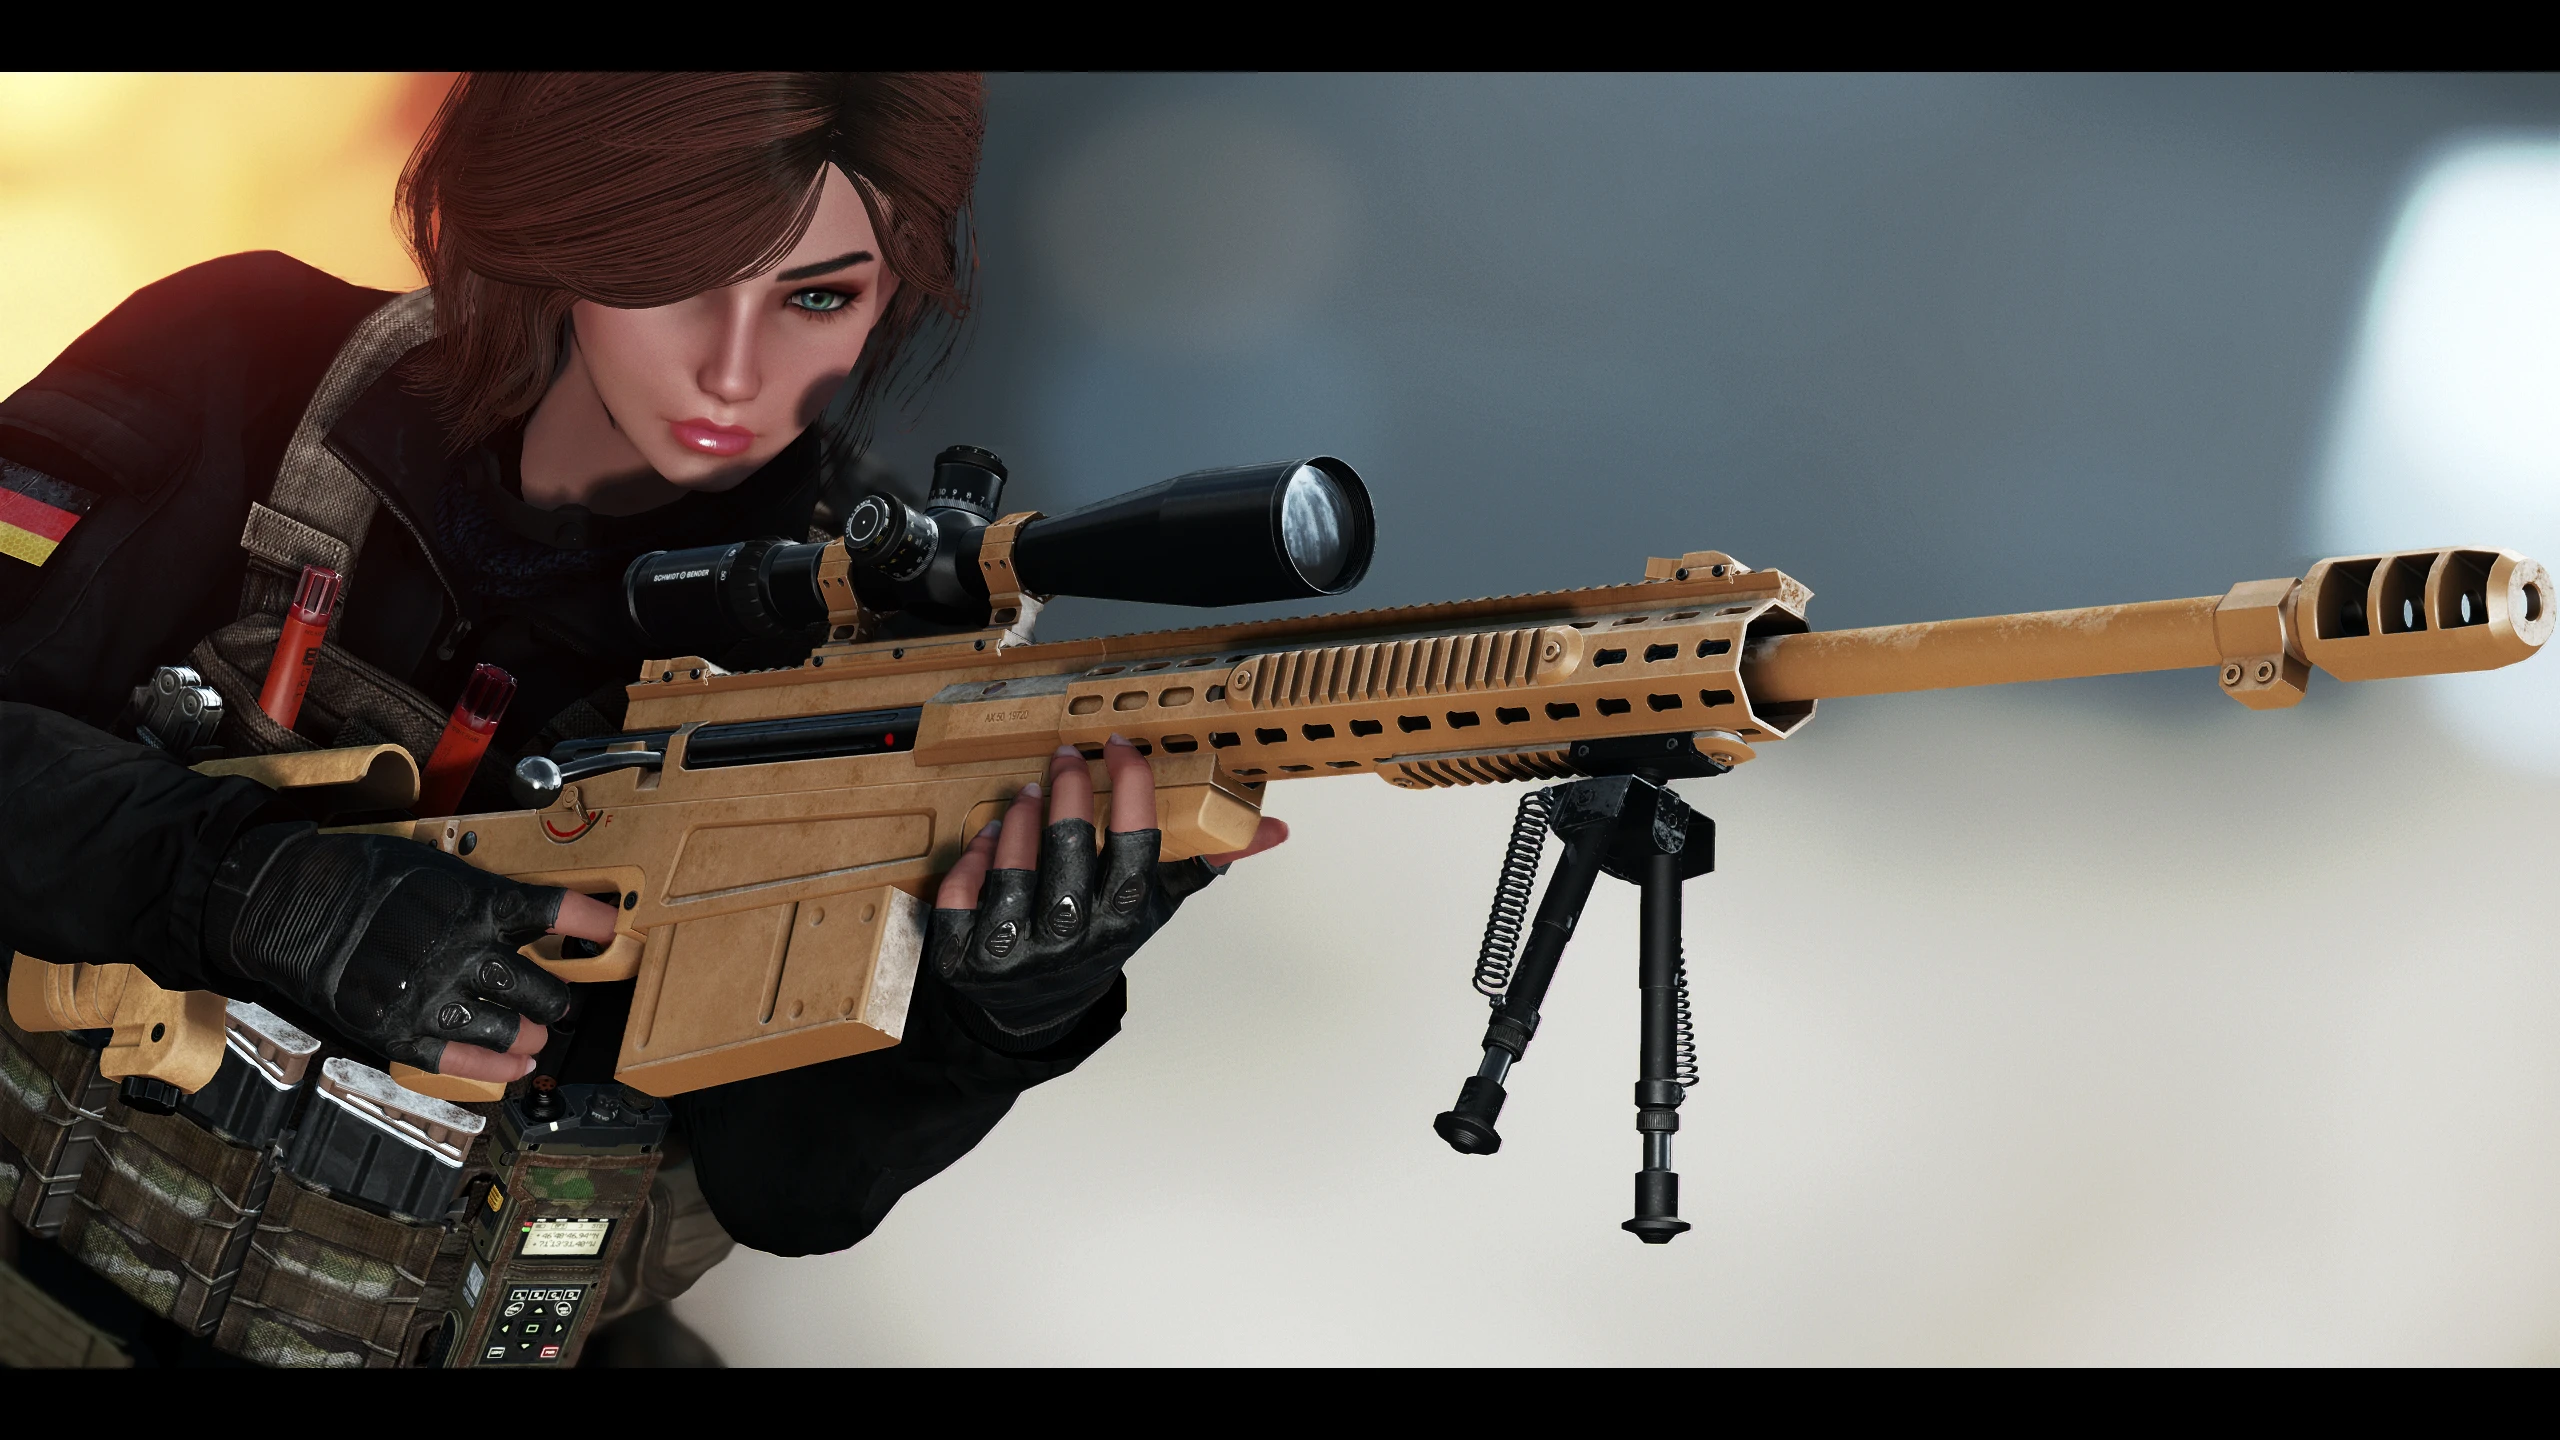 Anti materiel rifle для fallout 4 фото 54